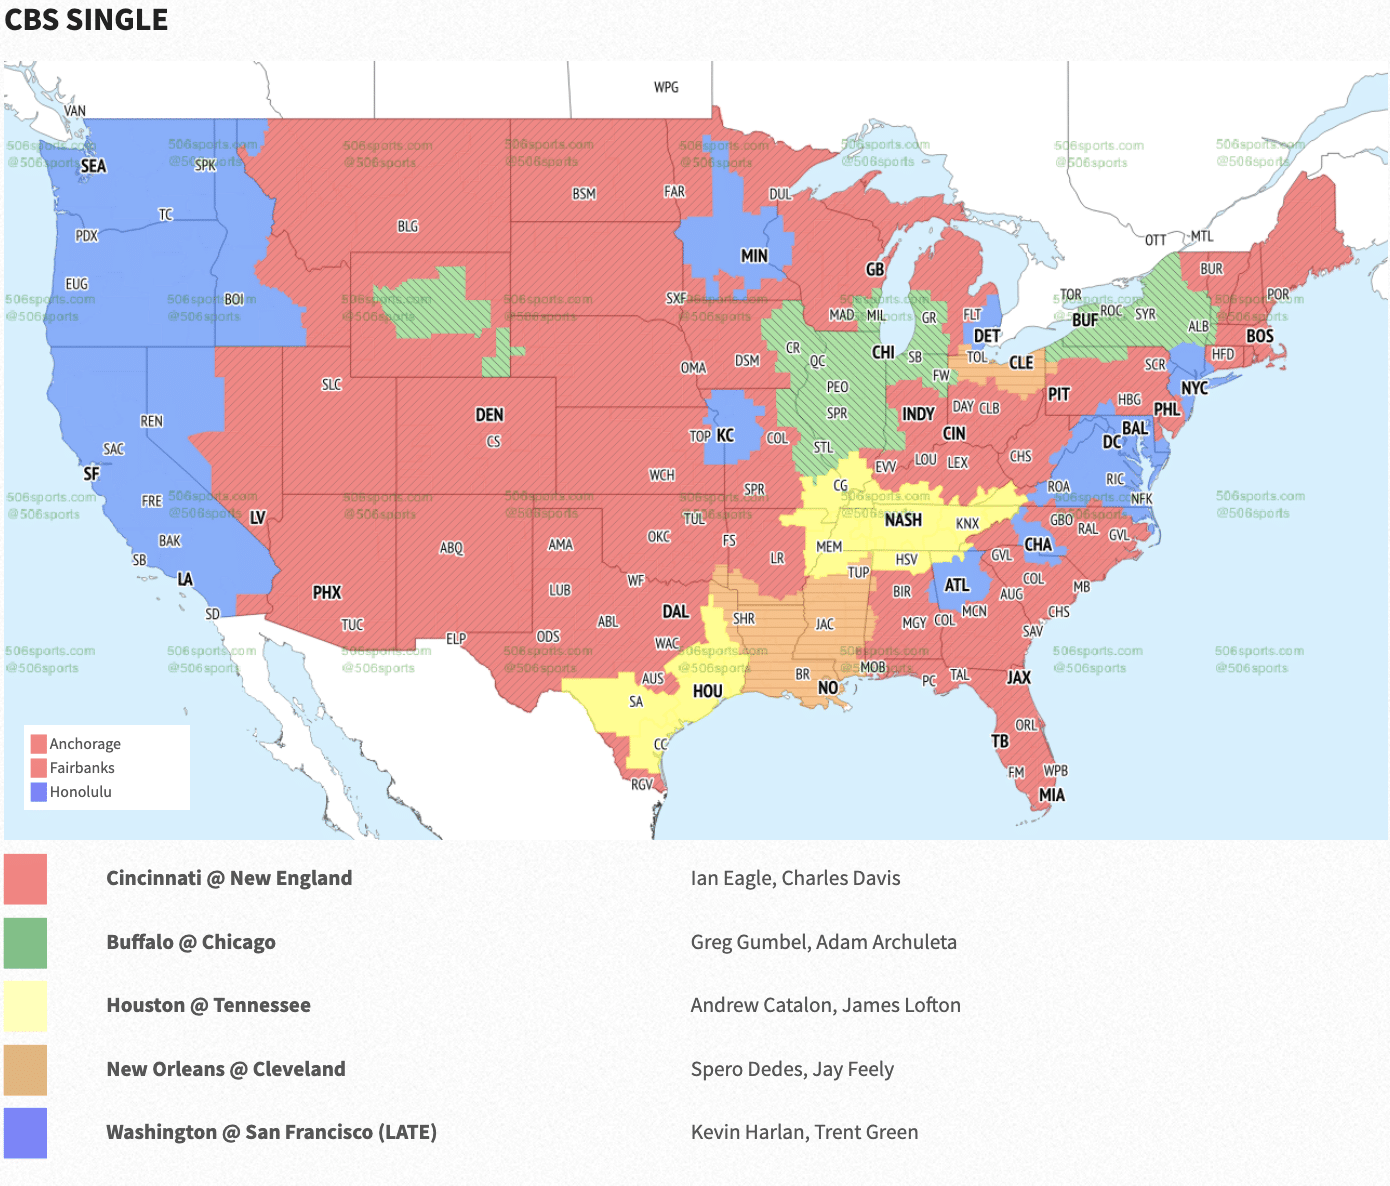 NFL Week 16 Coverage Maps